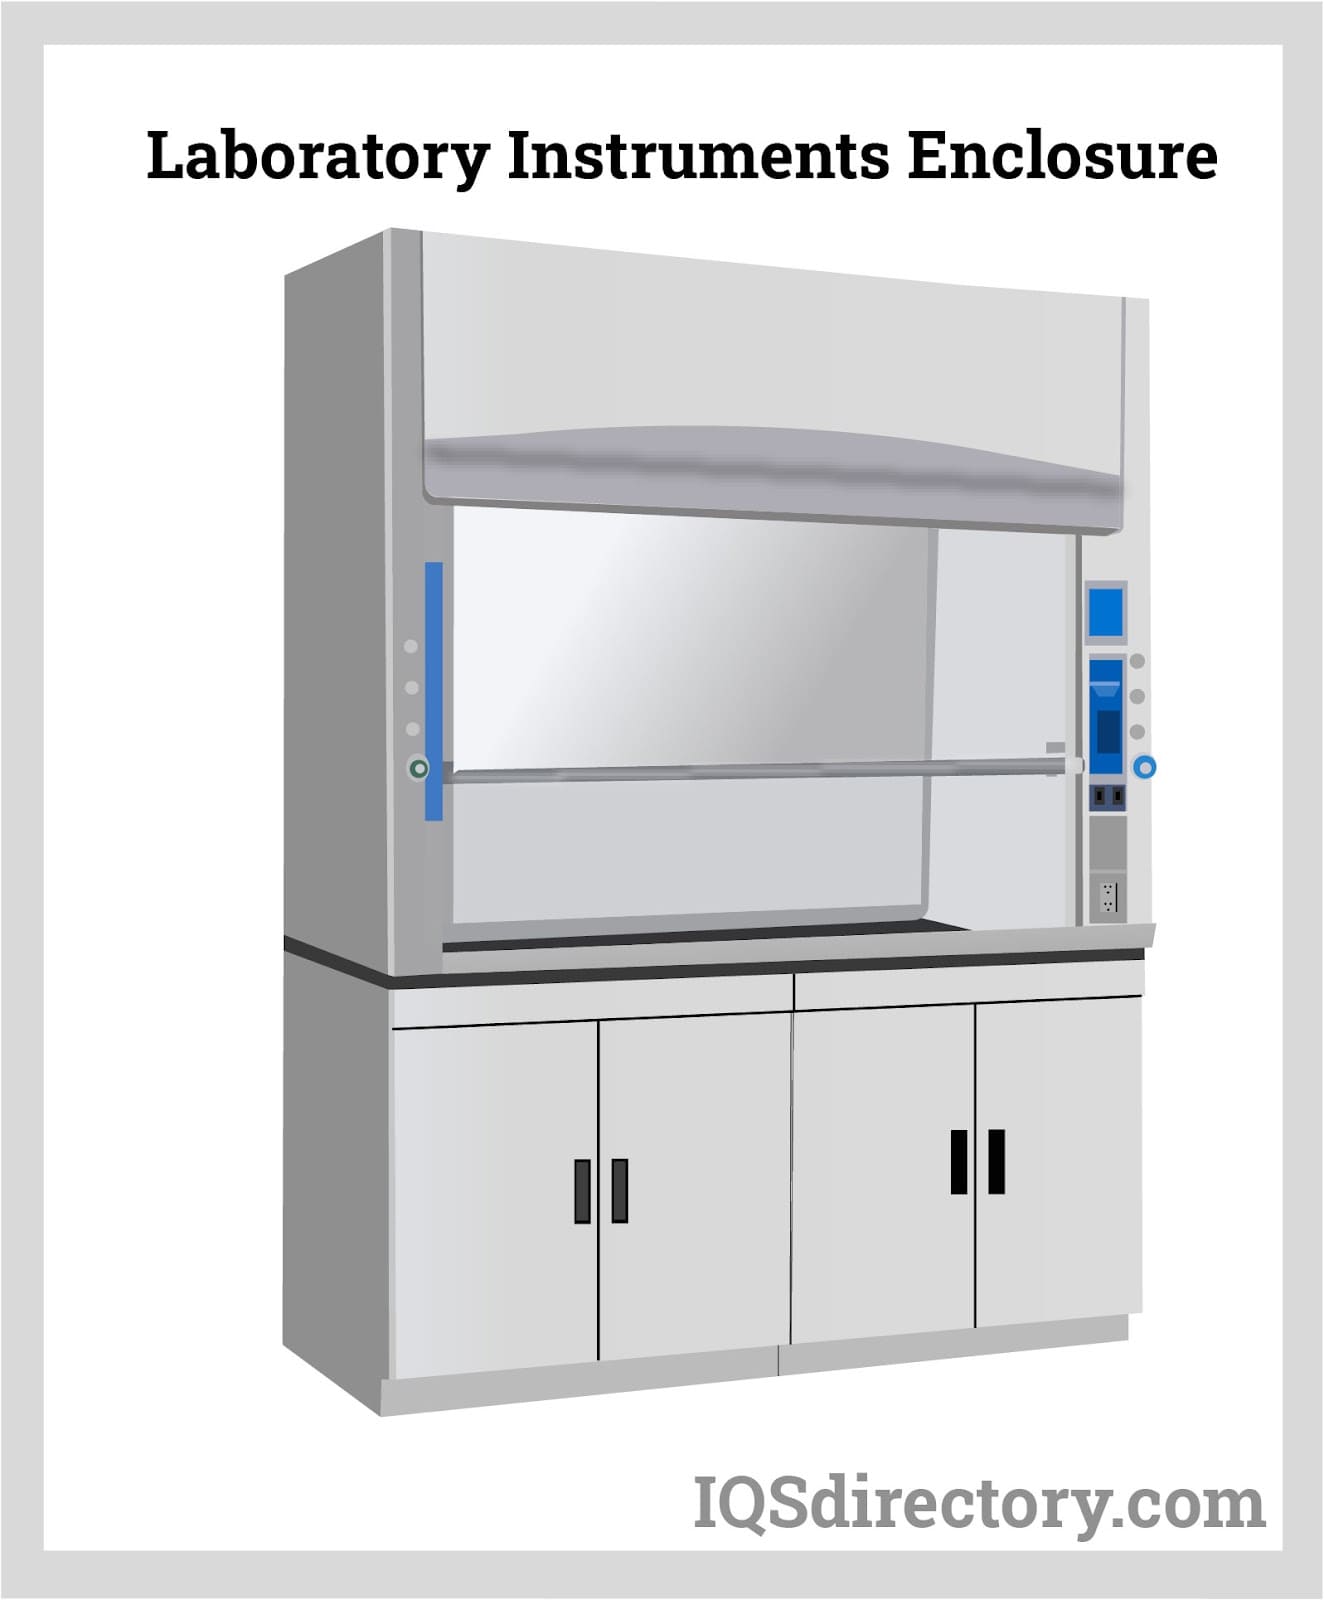 Laboratory Instruments Enclosure